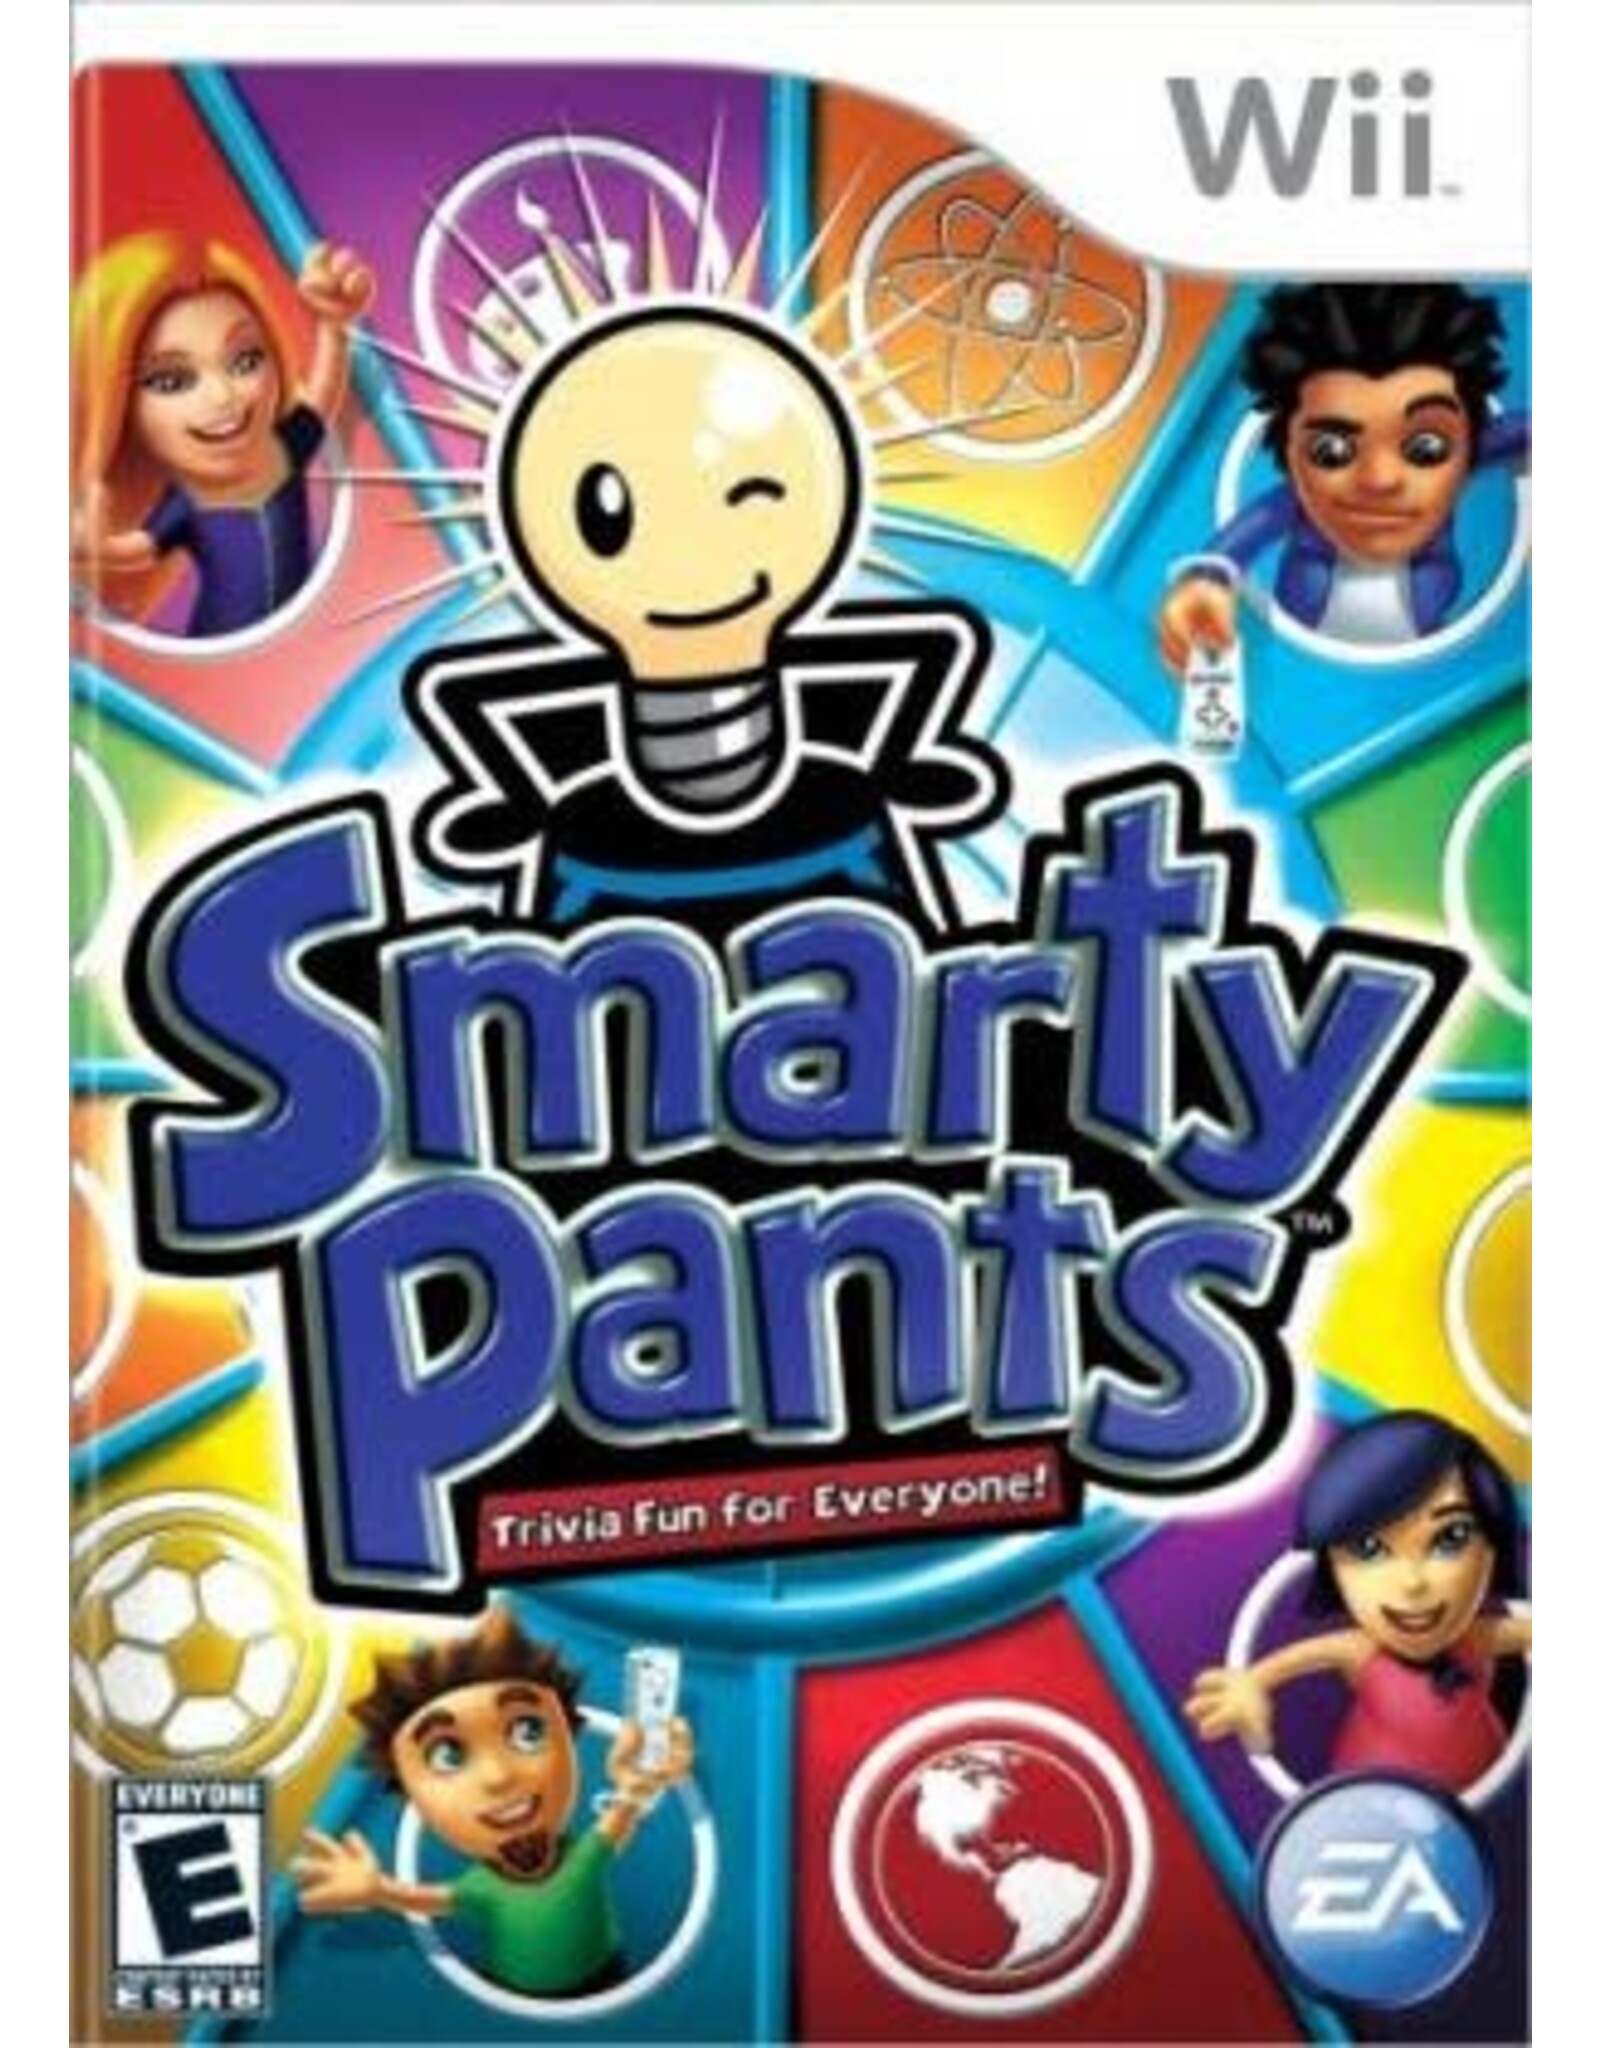 Wii Smarty Pants (CiB)